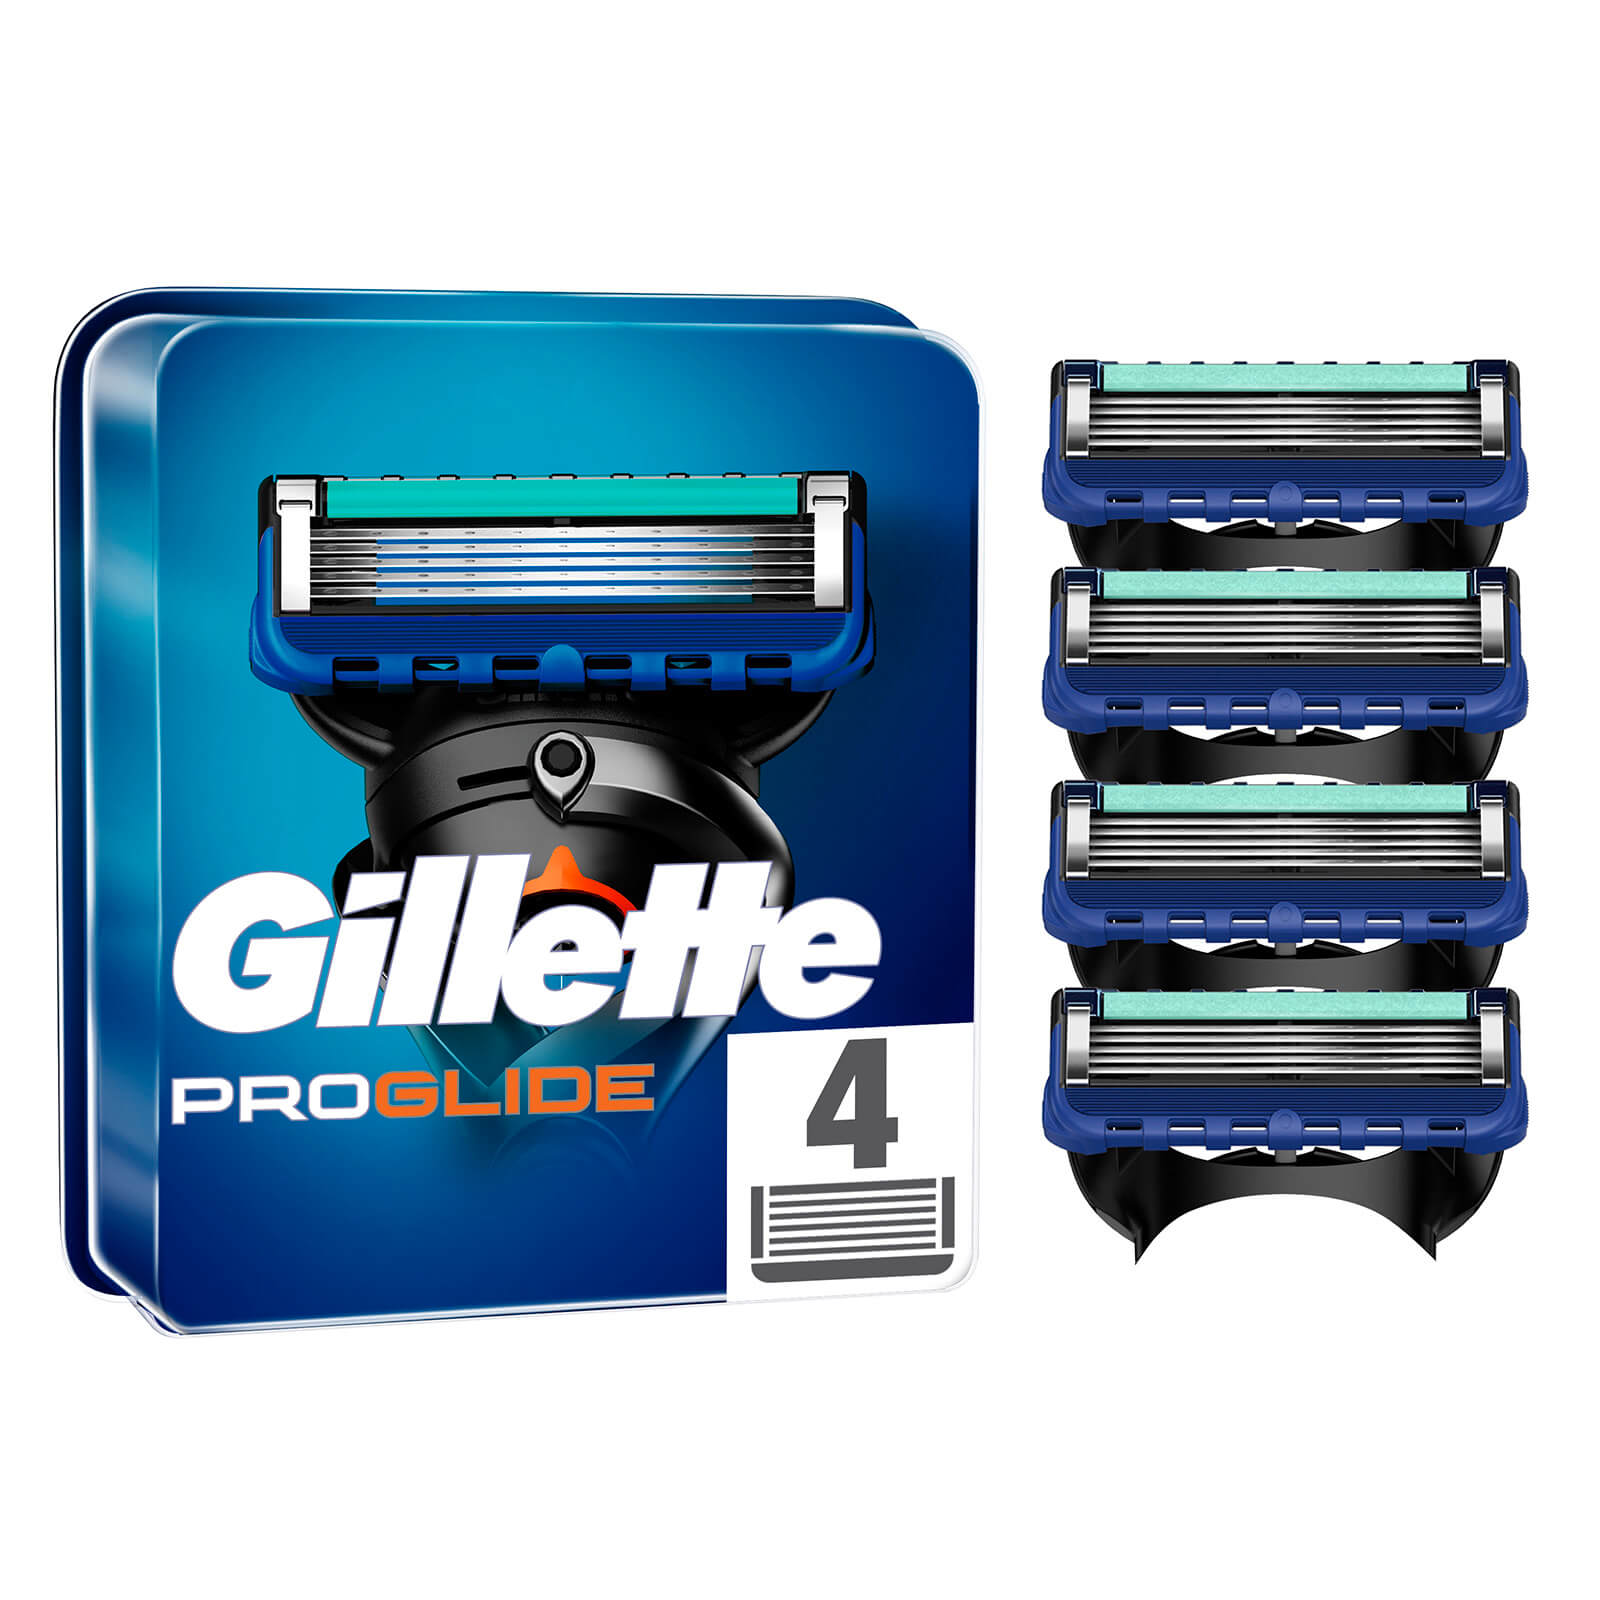 Gillette ProGlide Replacement Blades (4 Refills) lookfantastic.com imagine